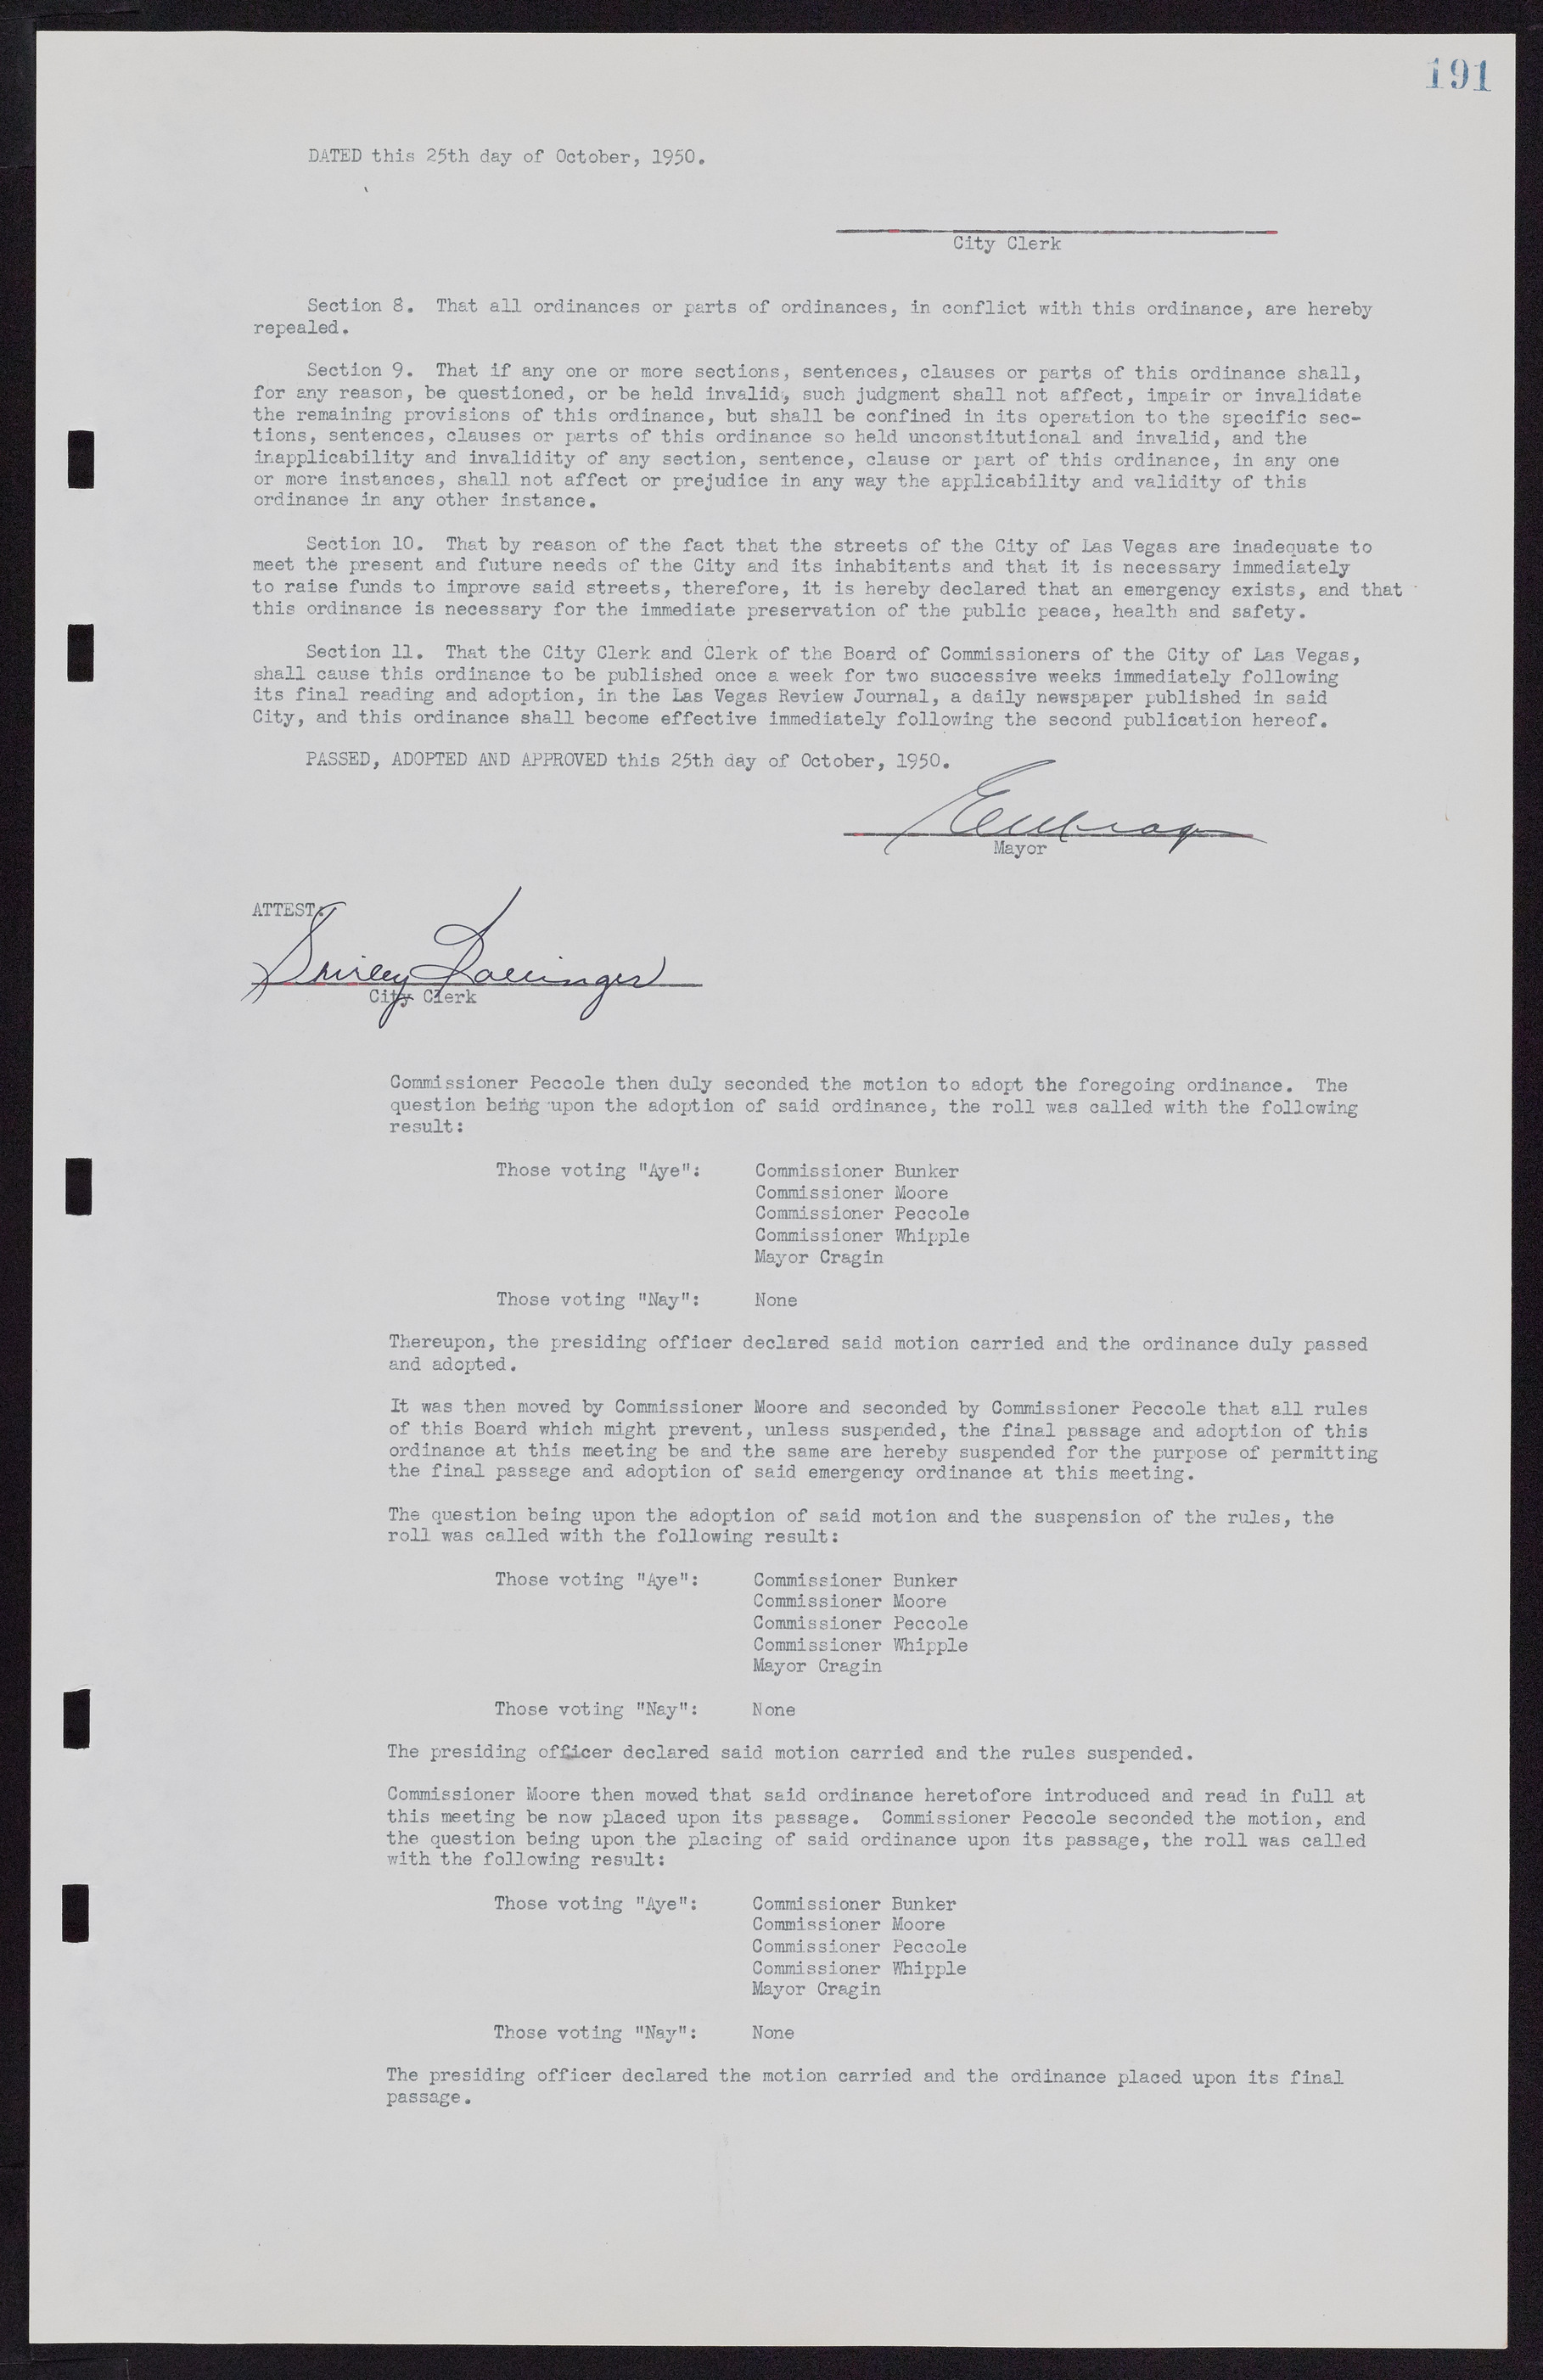 Las Vegas City Commission Minutes, November 7, 1949 to May 21, 1952, lvc000007-201